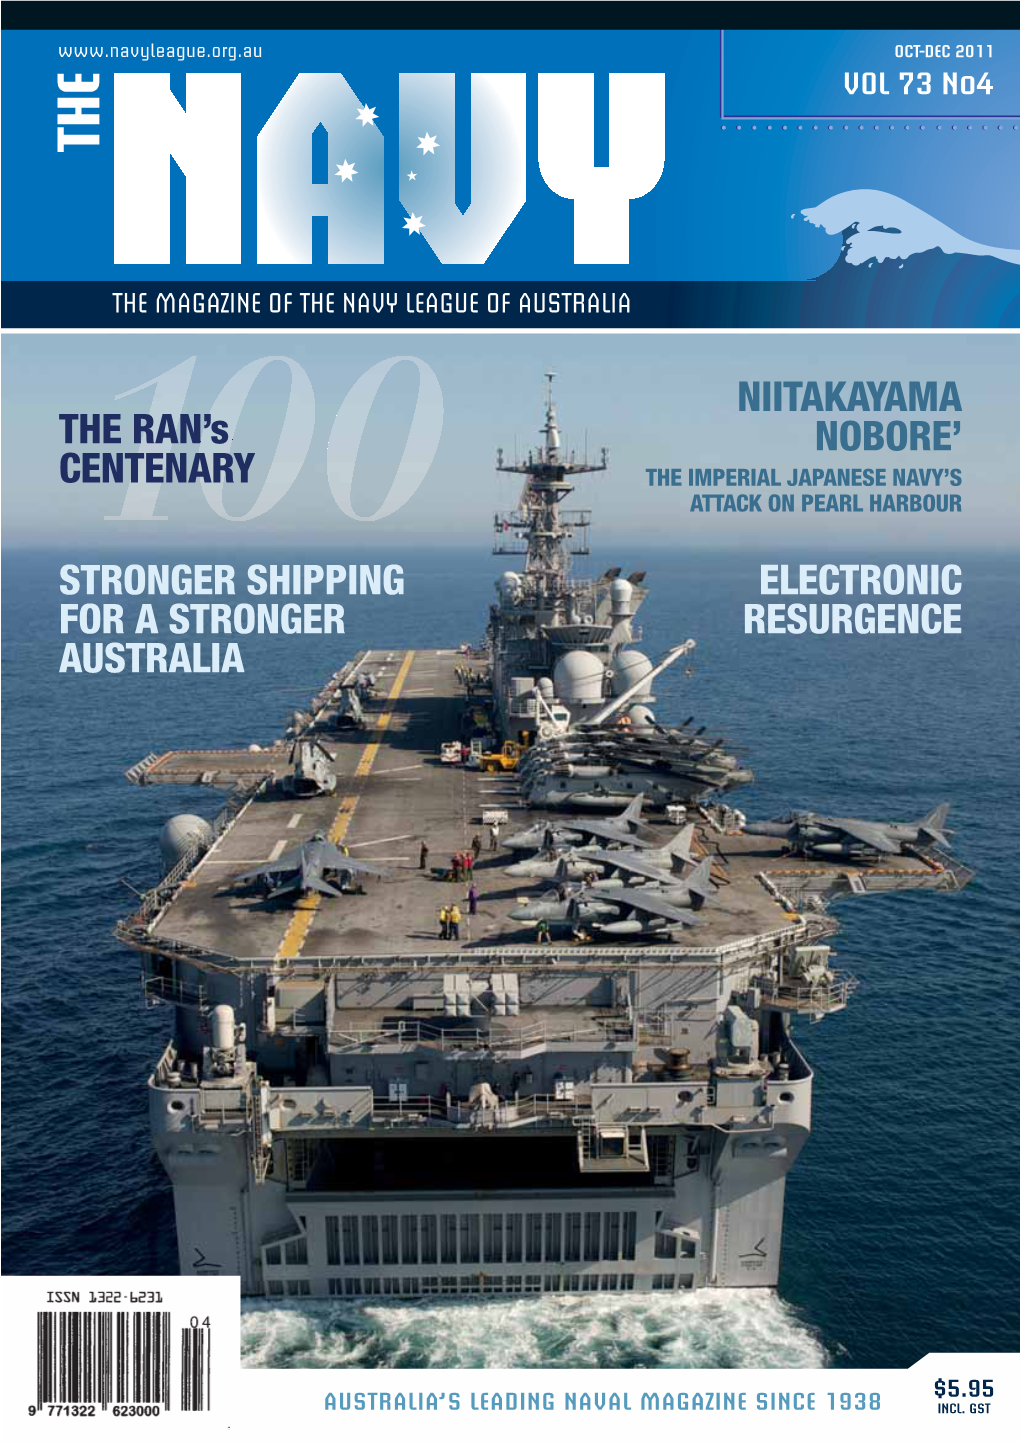 The Navy Vol 73 No 4 Oct 2011